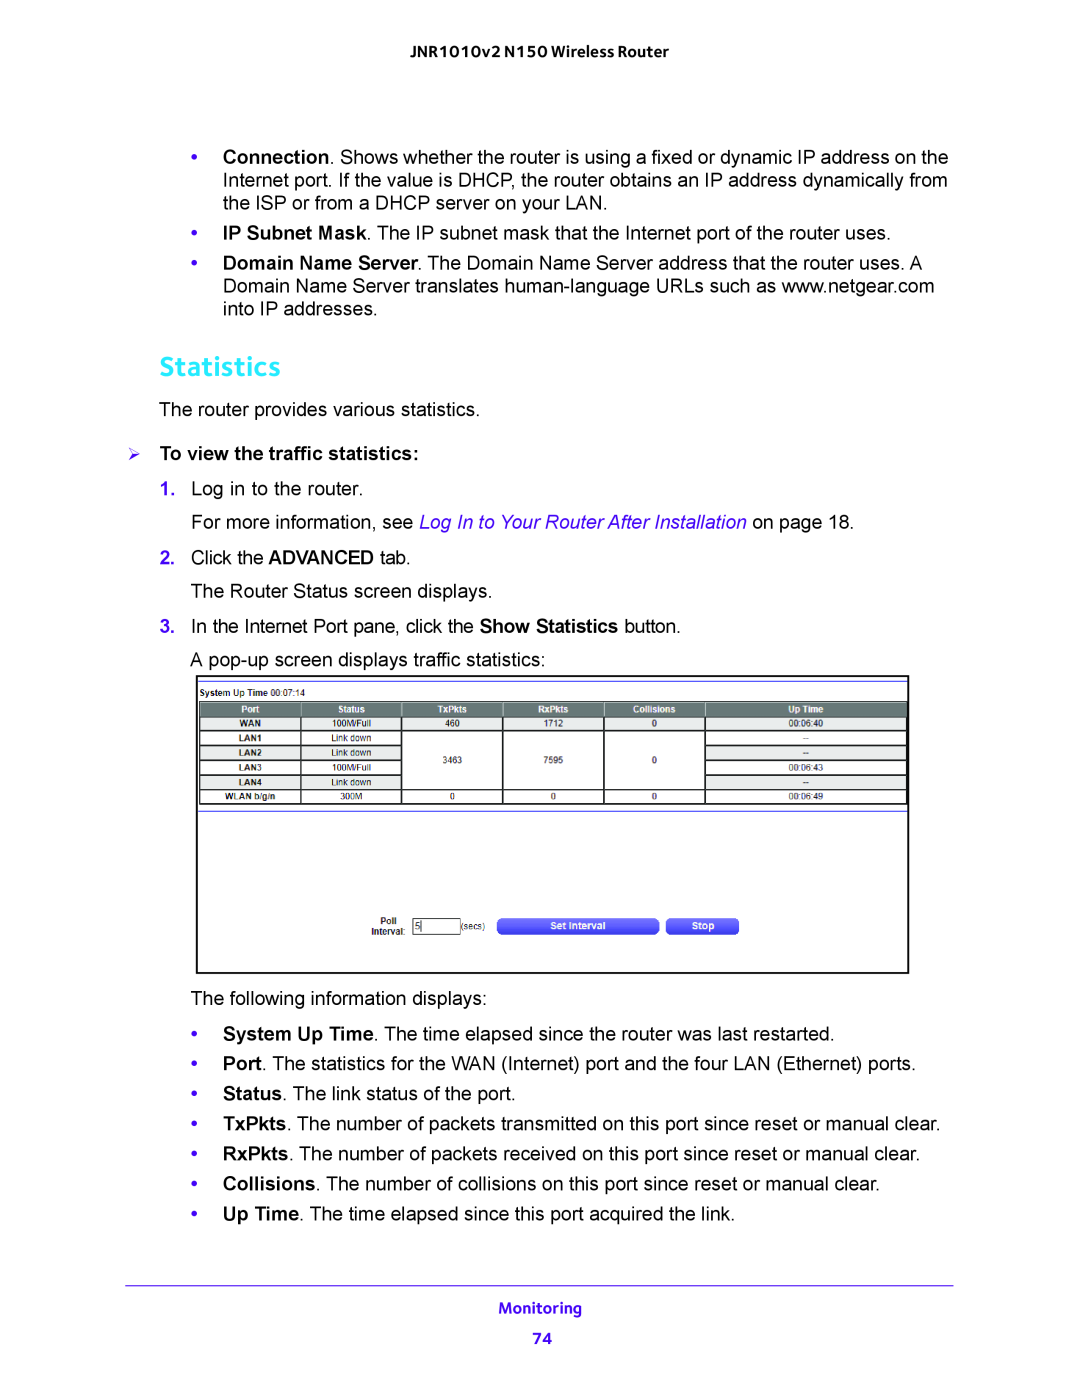 NETGEAR JNR1010V2 user manual Statistics,  To view the traffic statistics 